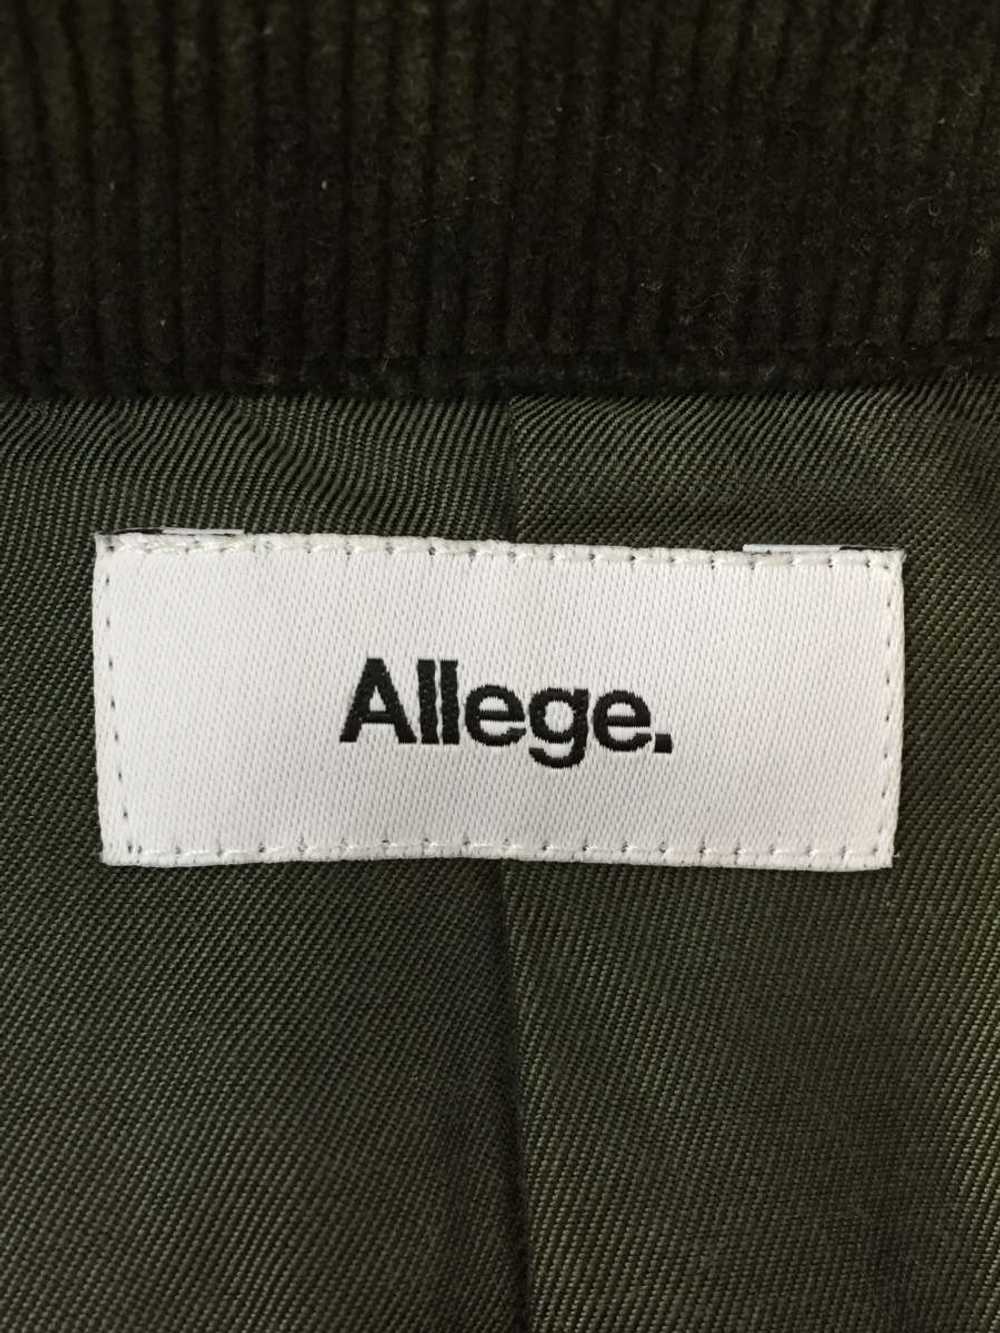 Allege - green corduroy jacket - image 2